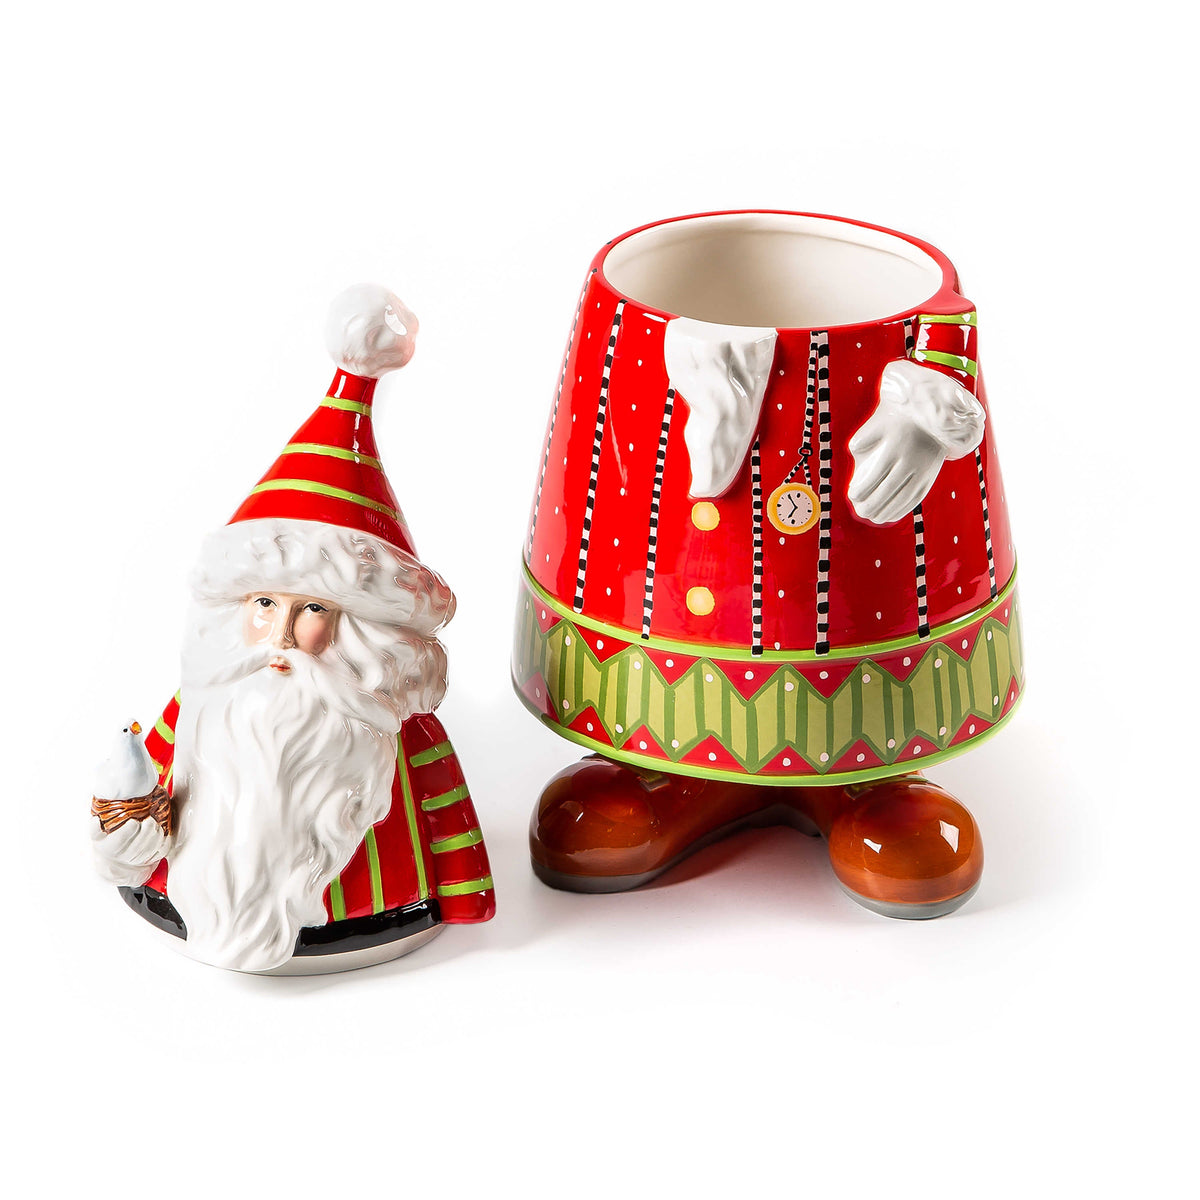 Dashaway Santa Cookie Jar - My Christmas